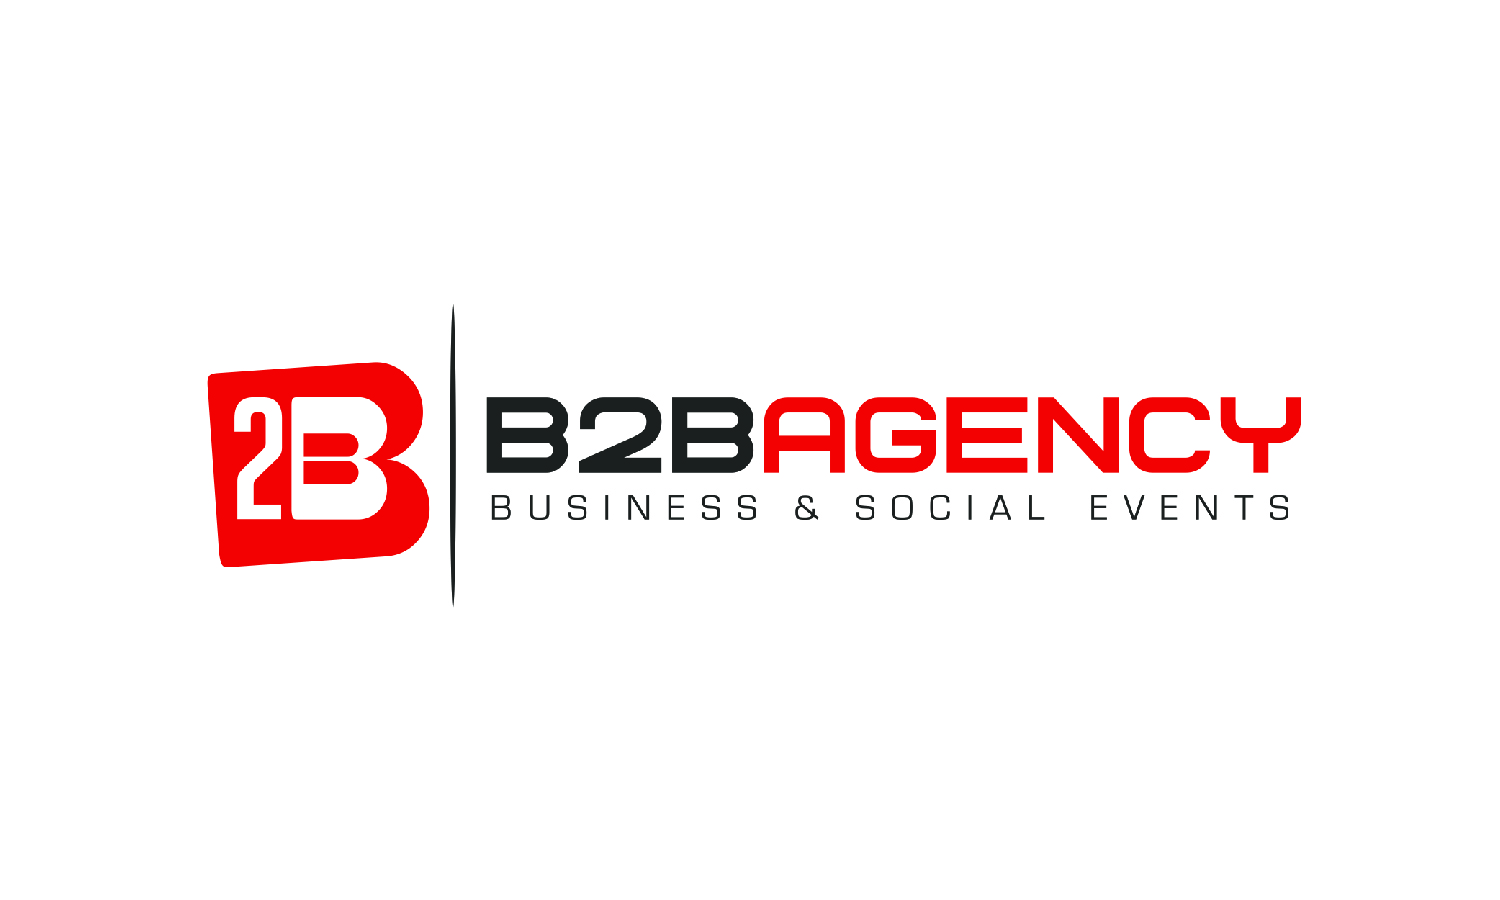 B2B Agency